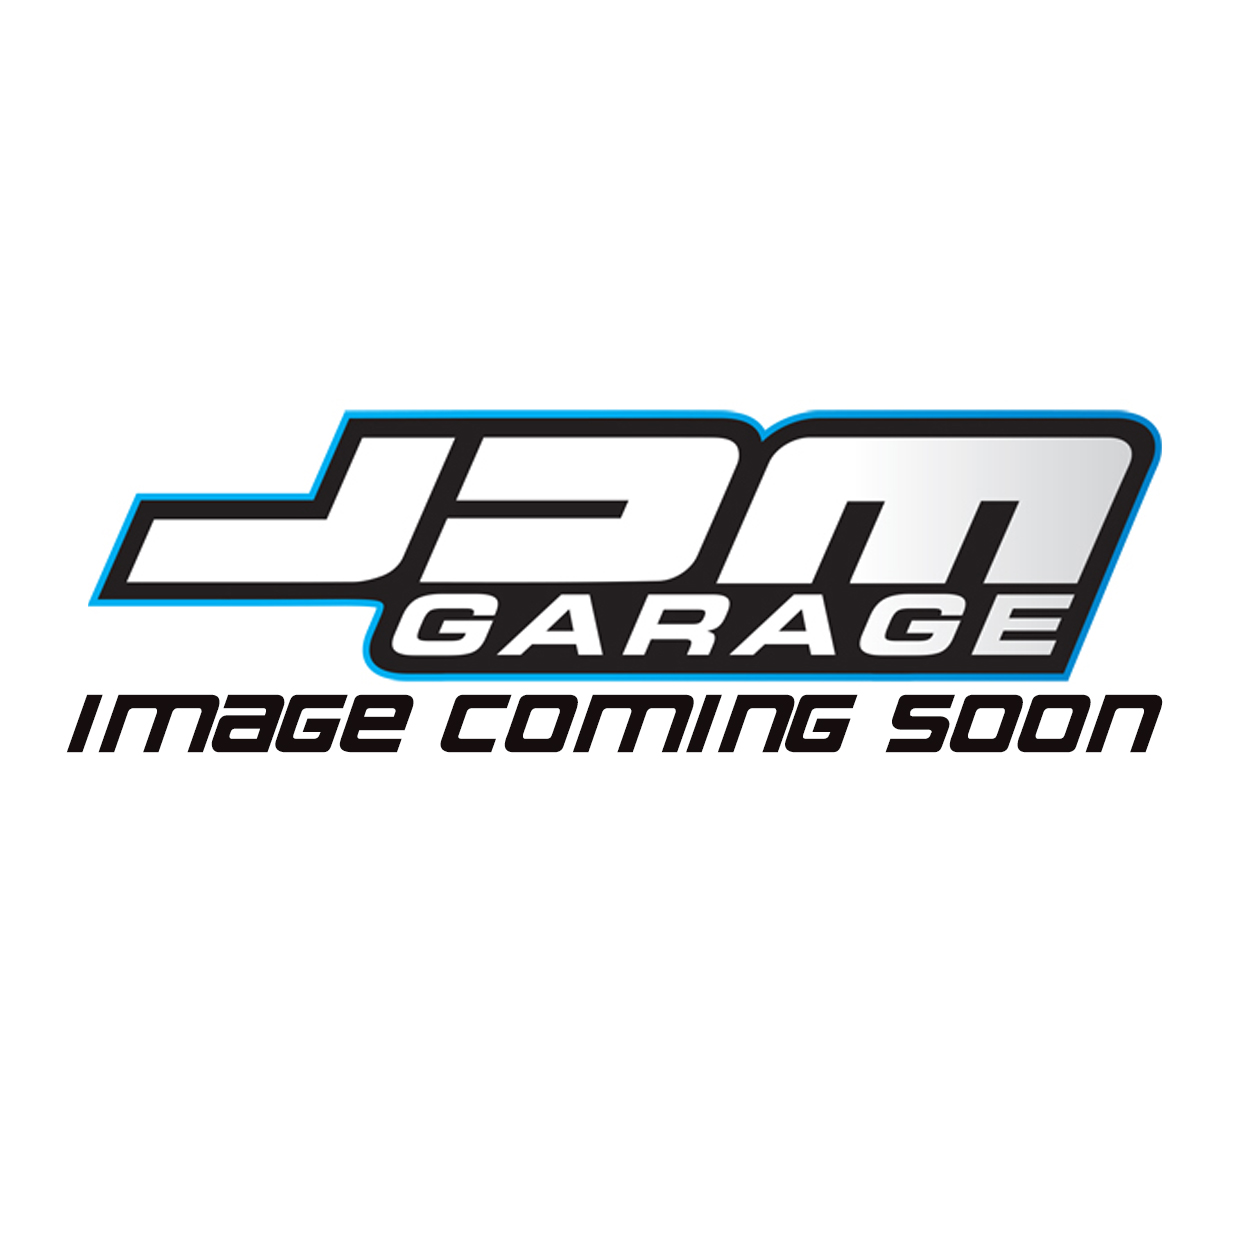 JDM Garage Original Pull-On Beanie - Black